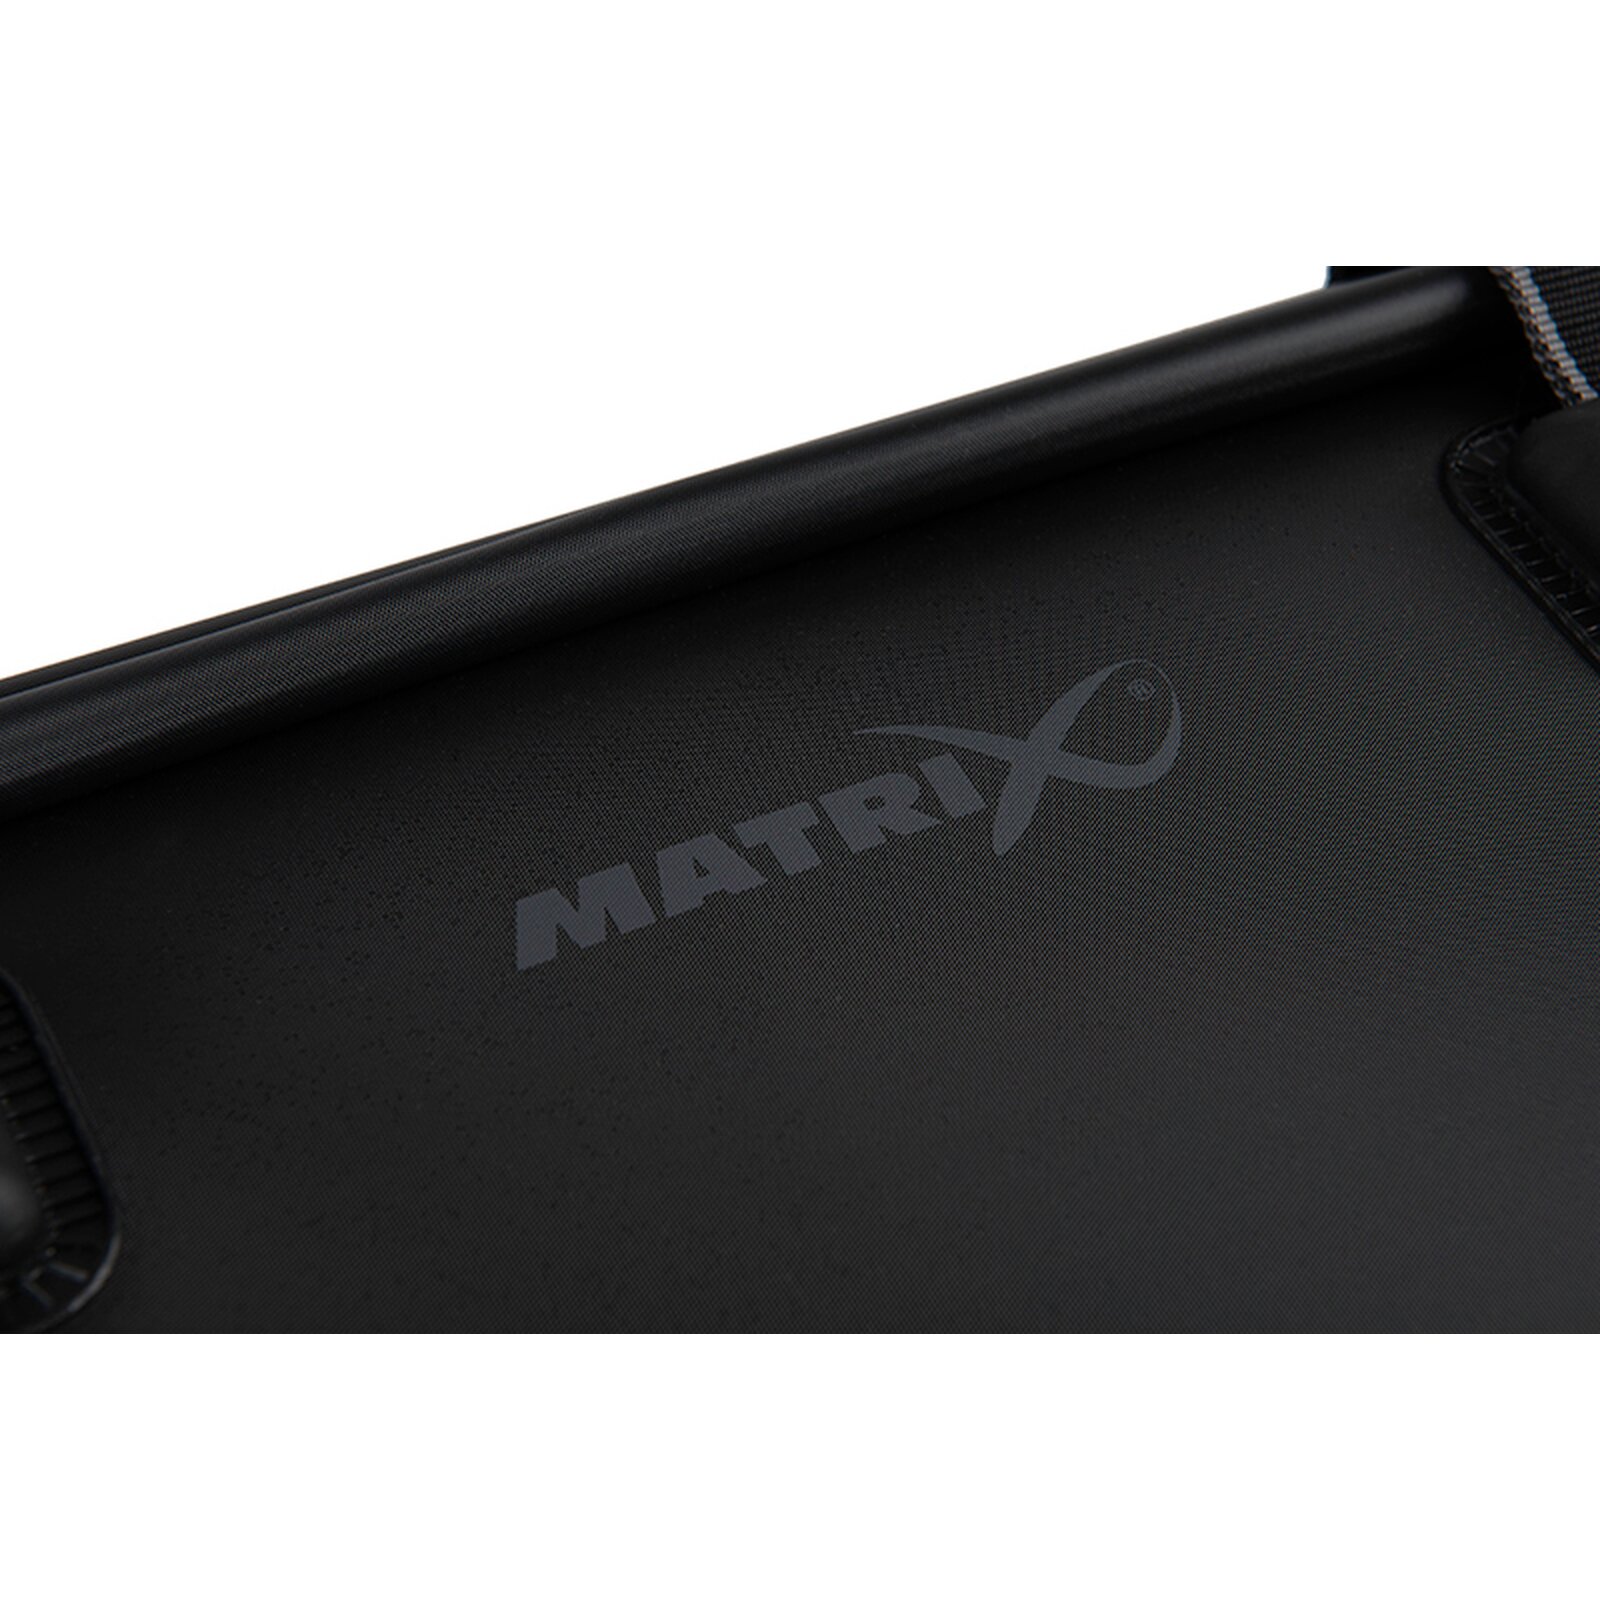 Matrix EVA XL Tackle Storage System (Loaded)